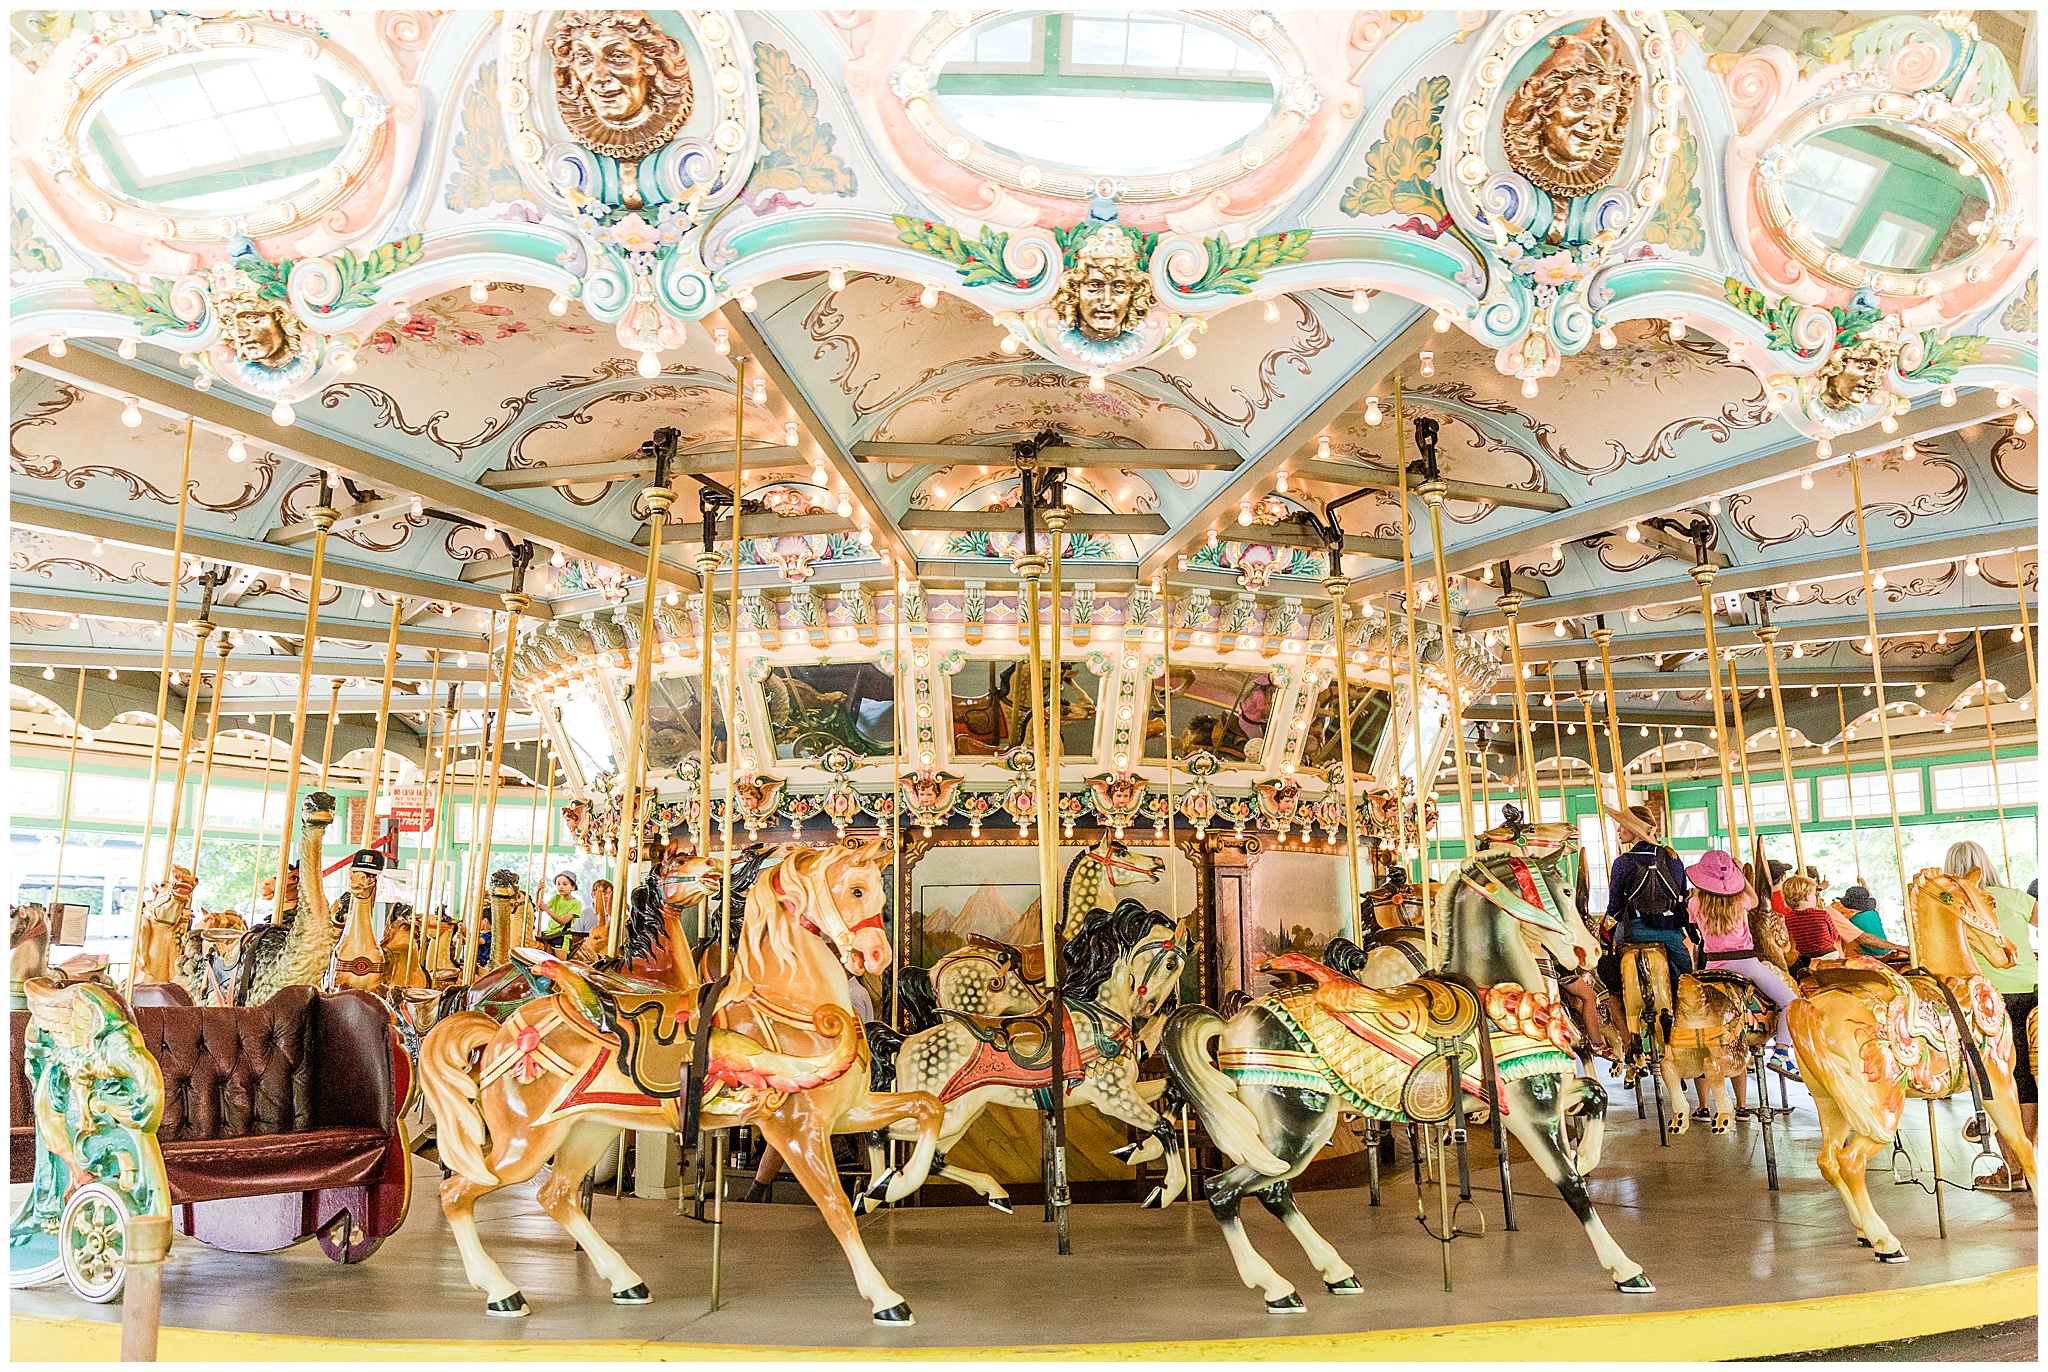 Vintage Carousel at Glen Echo Park in Glen Echo, Maryland by Kofmehl Photography